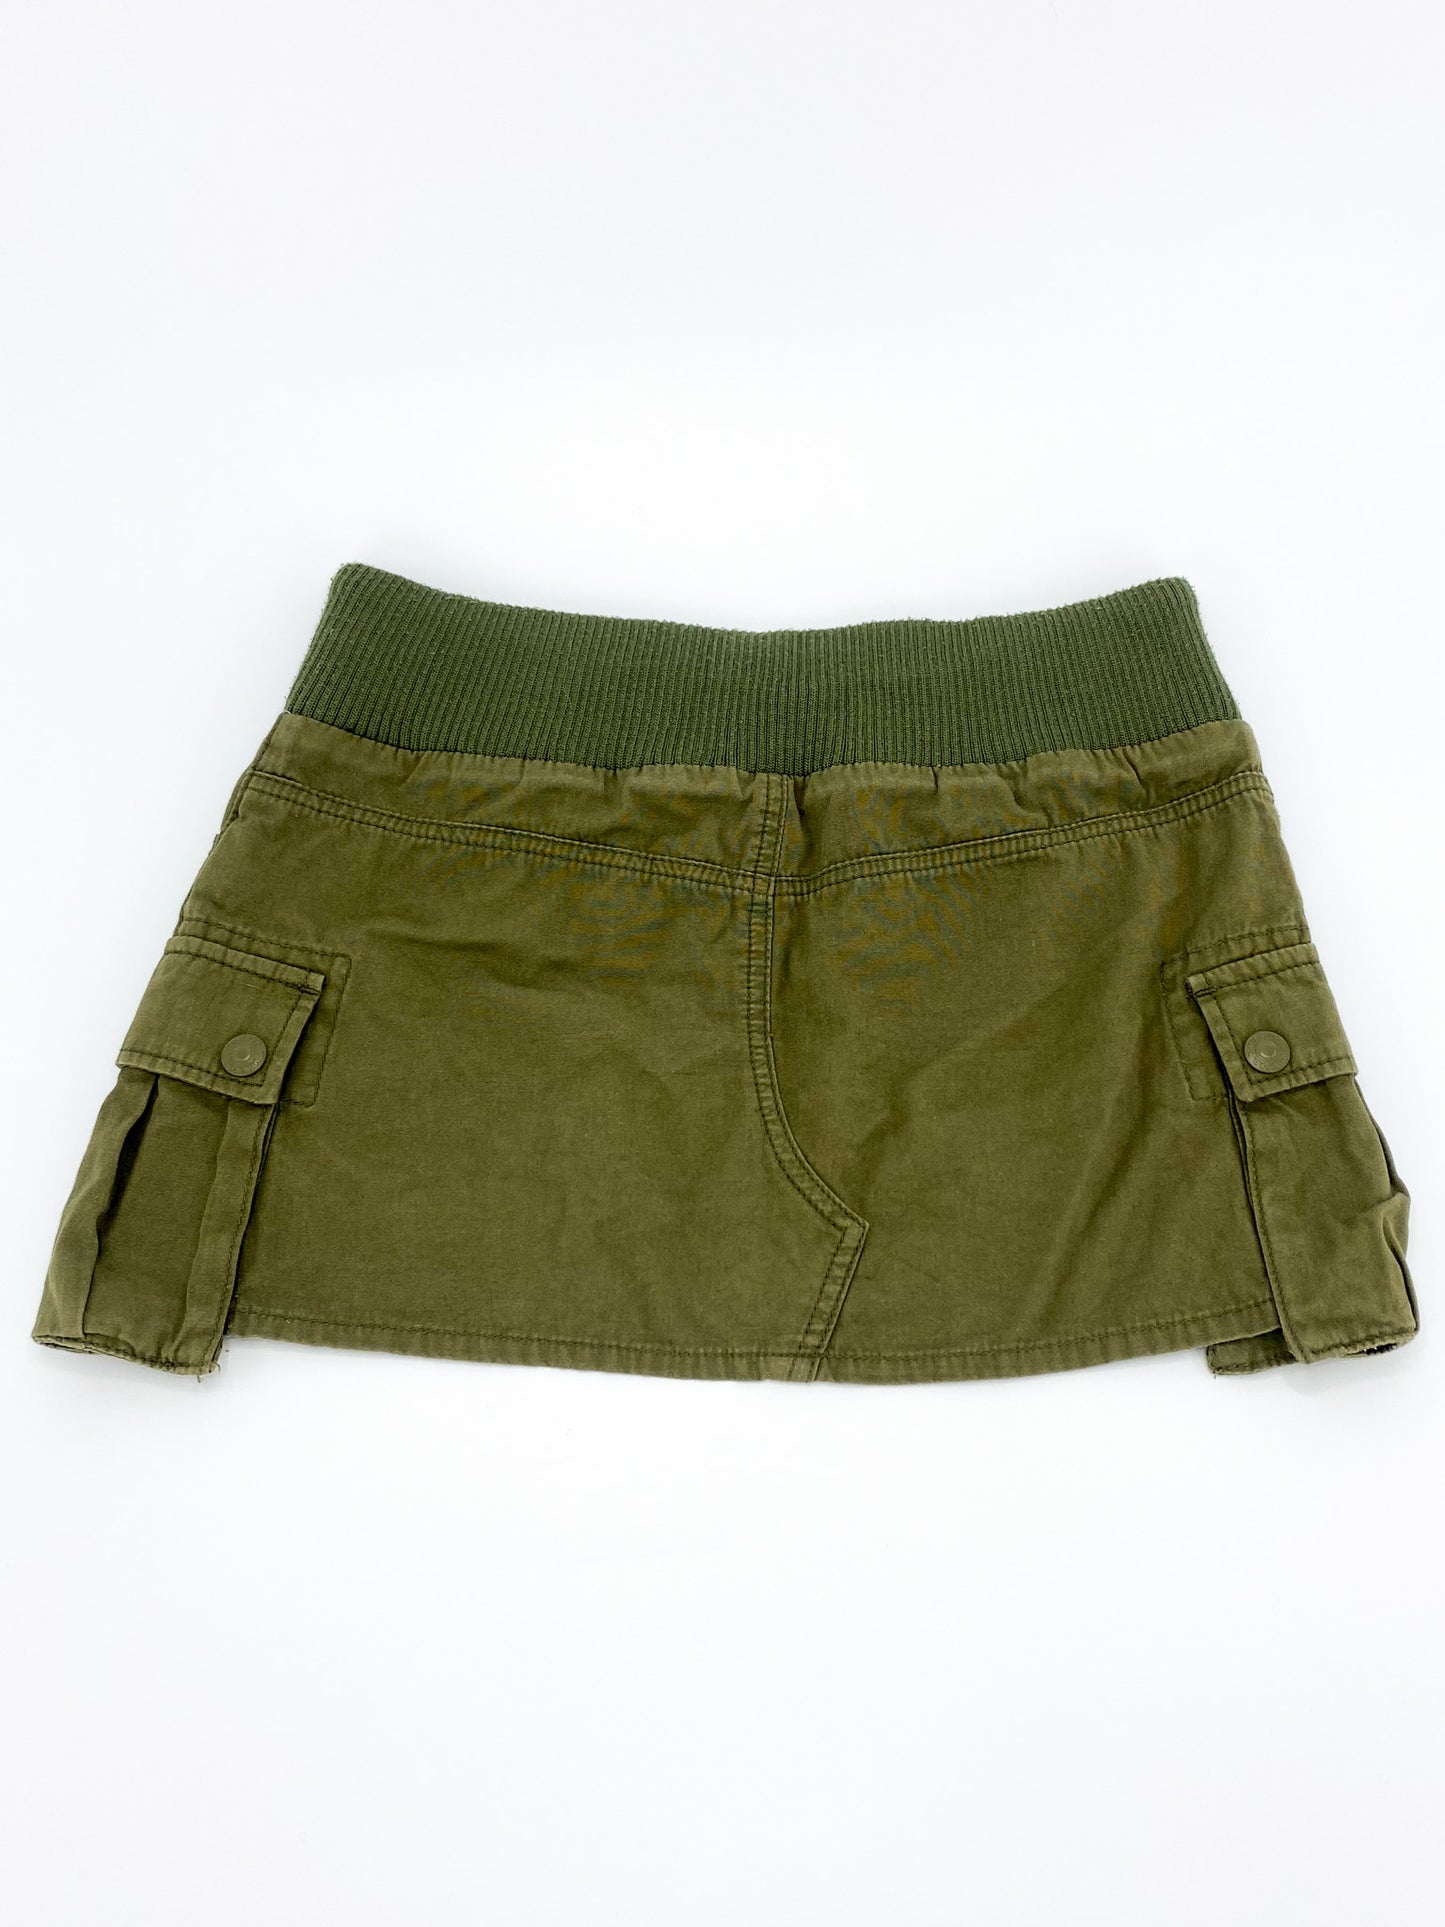 Vintage 00's Khaki Mini Skirt - S